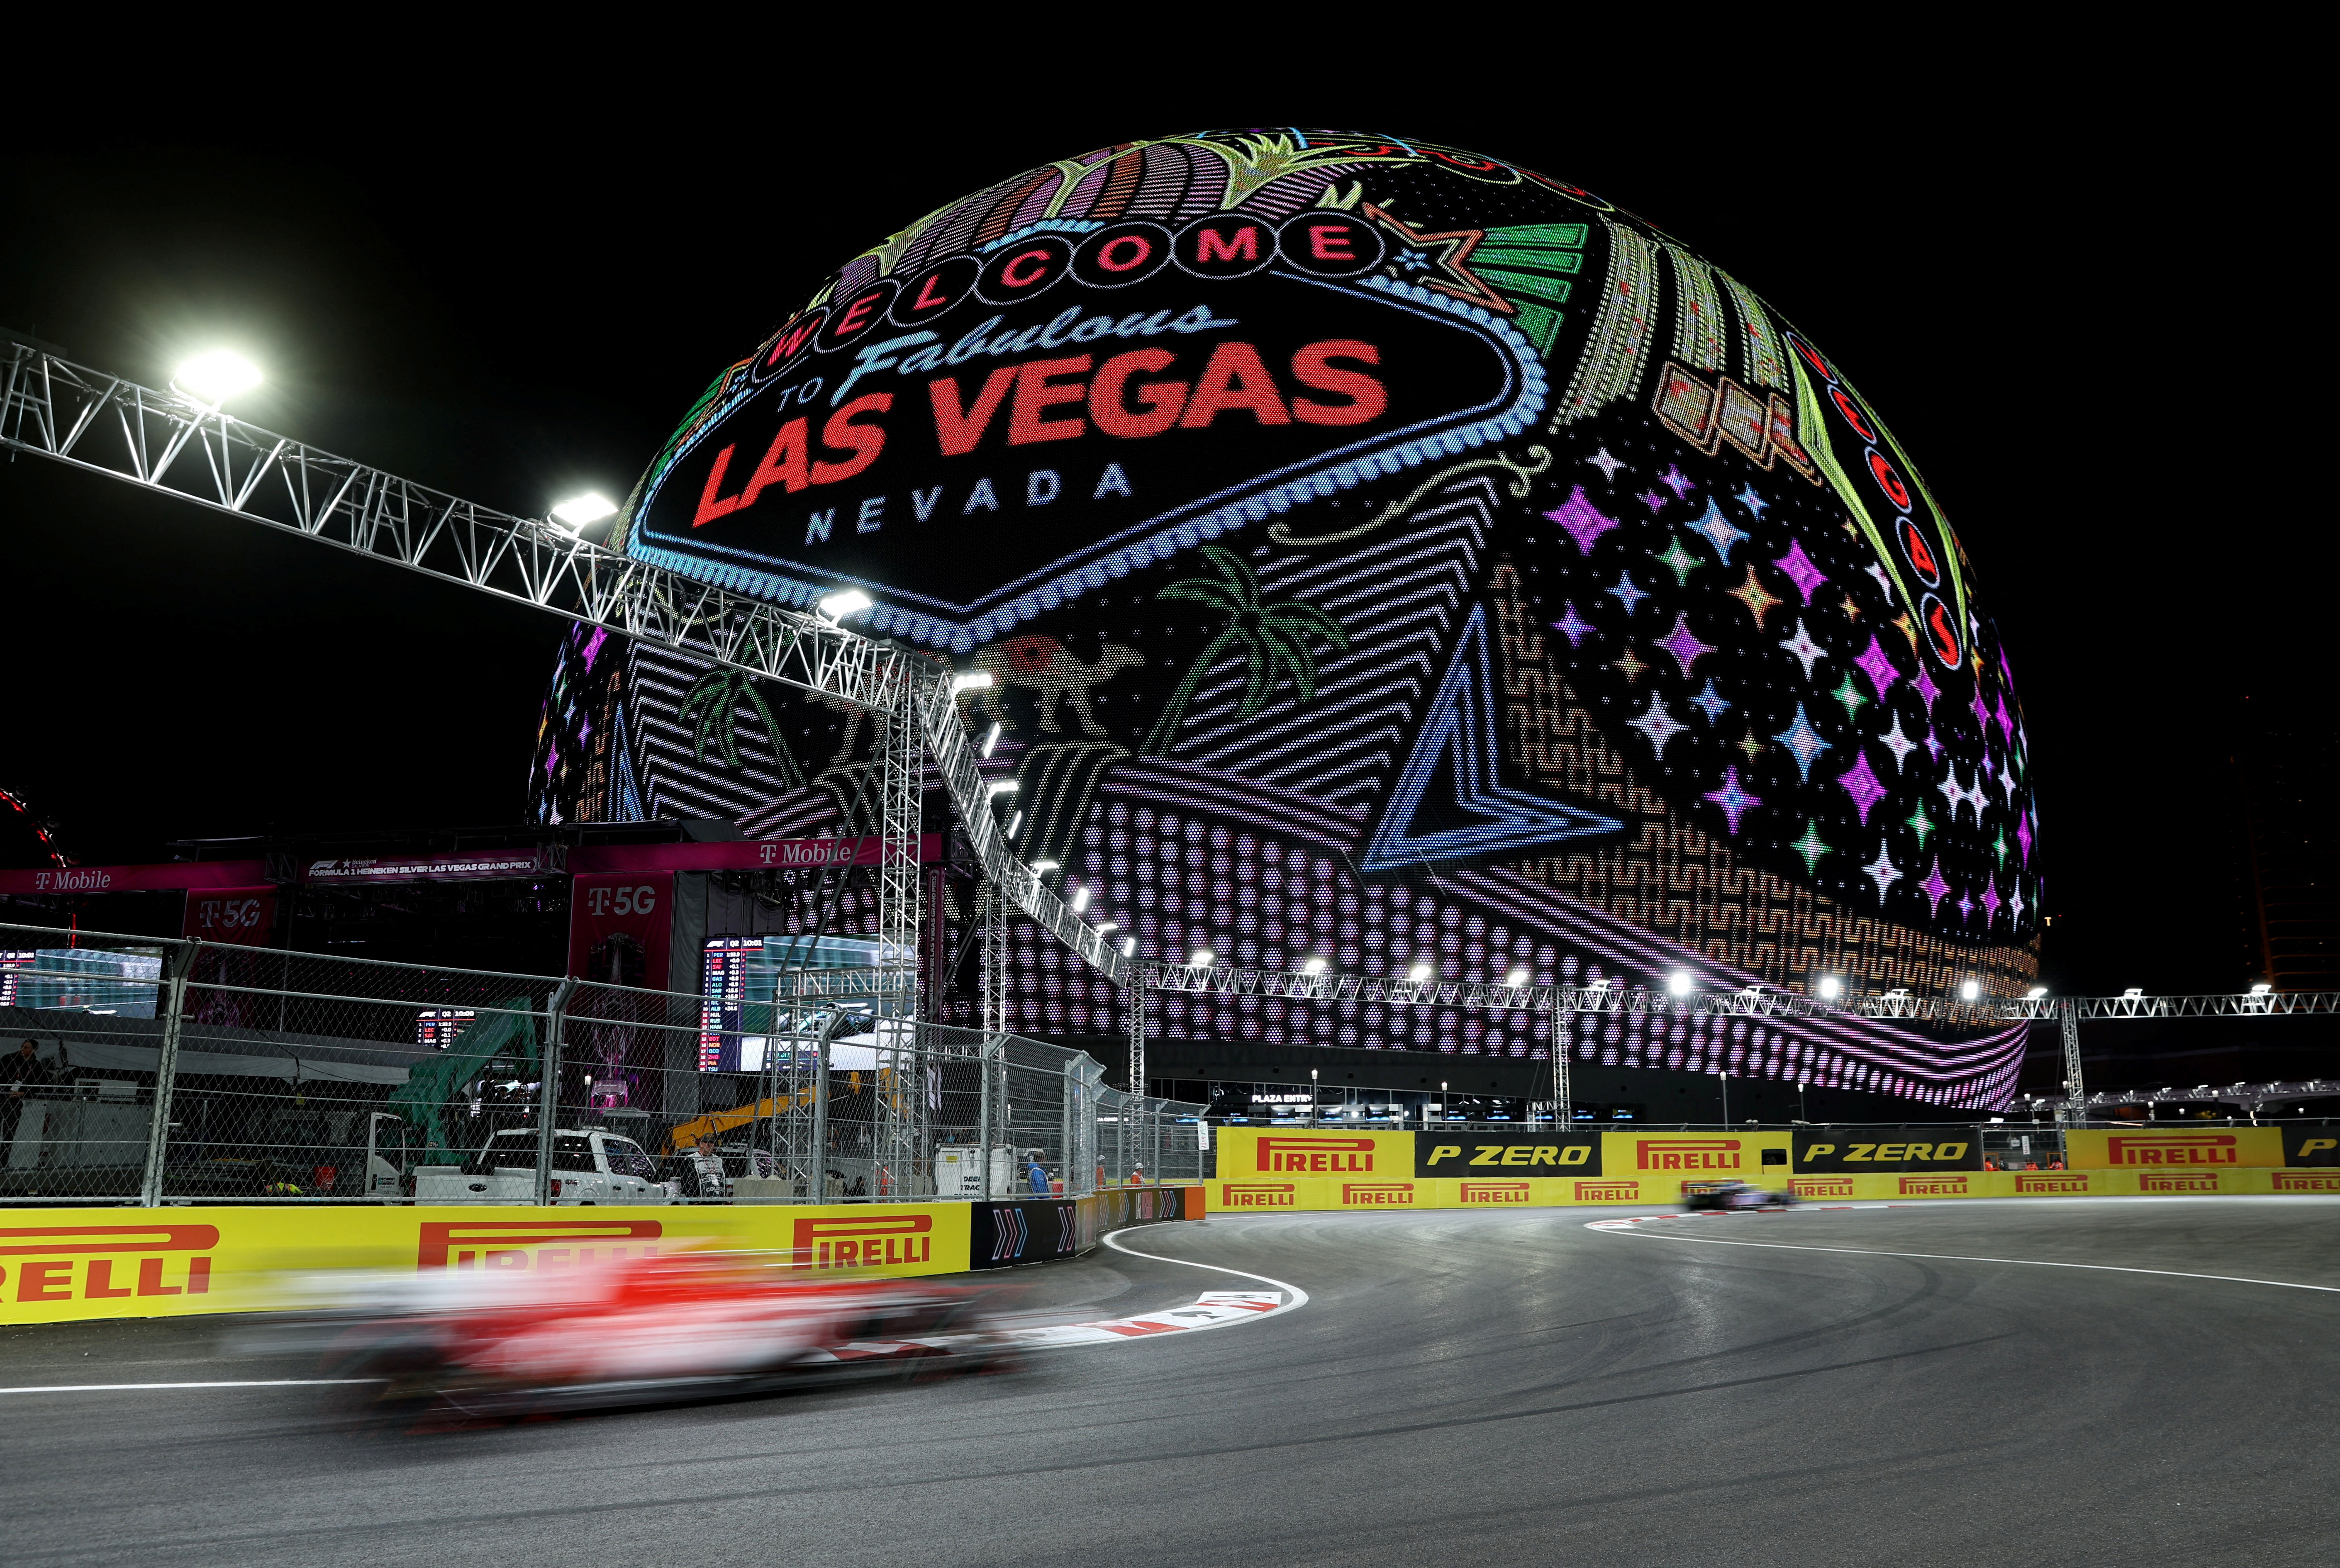 Las Vegas Grand Prix: Latest News and Updates